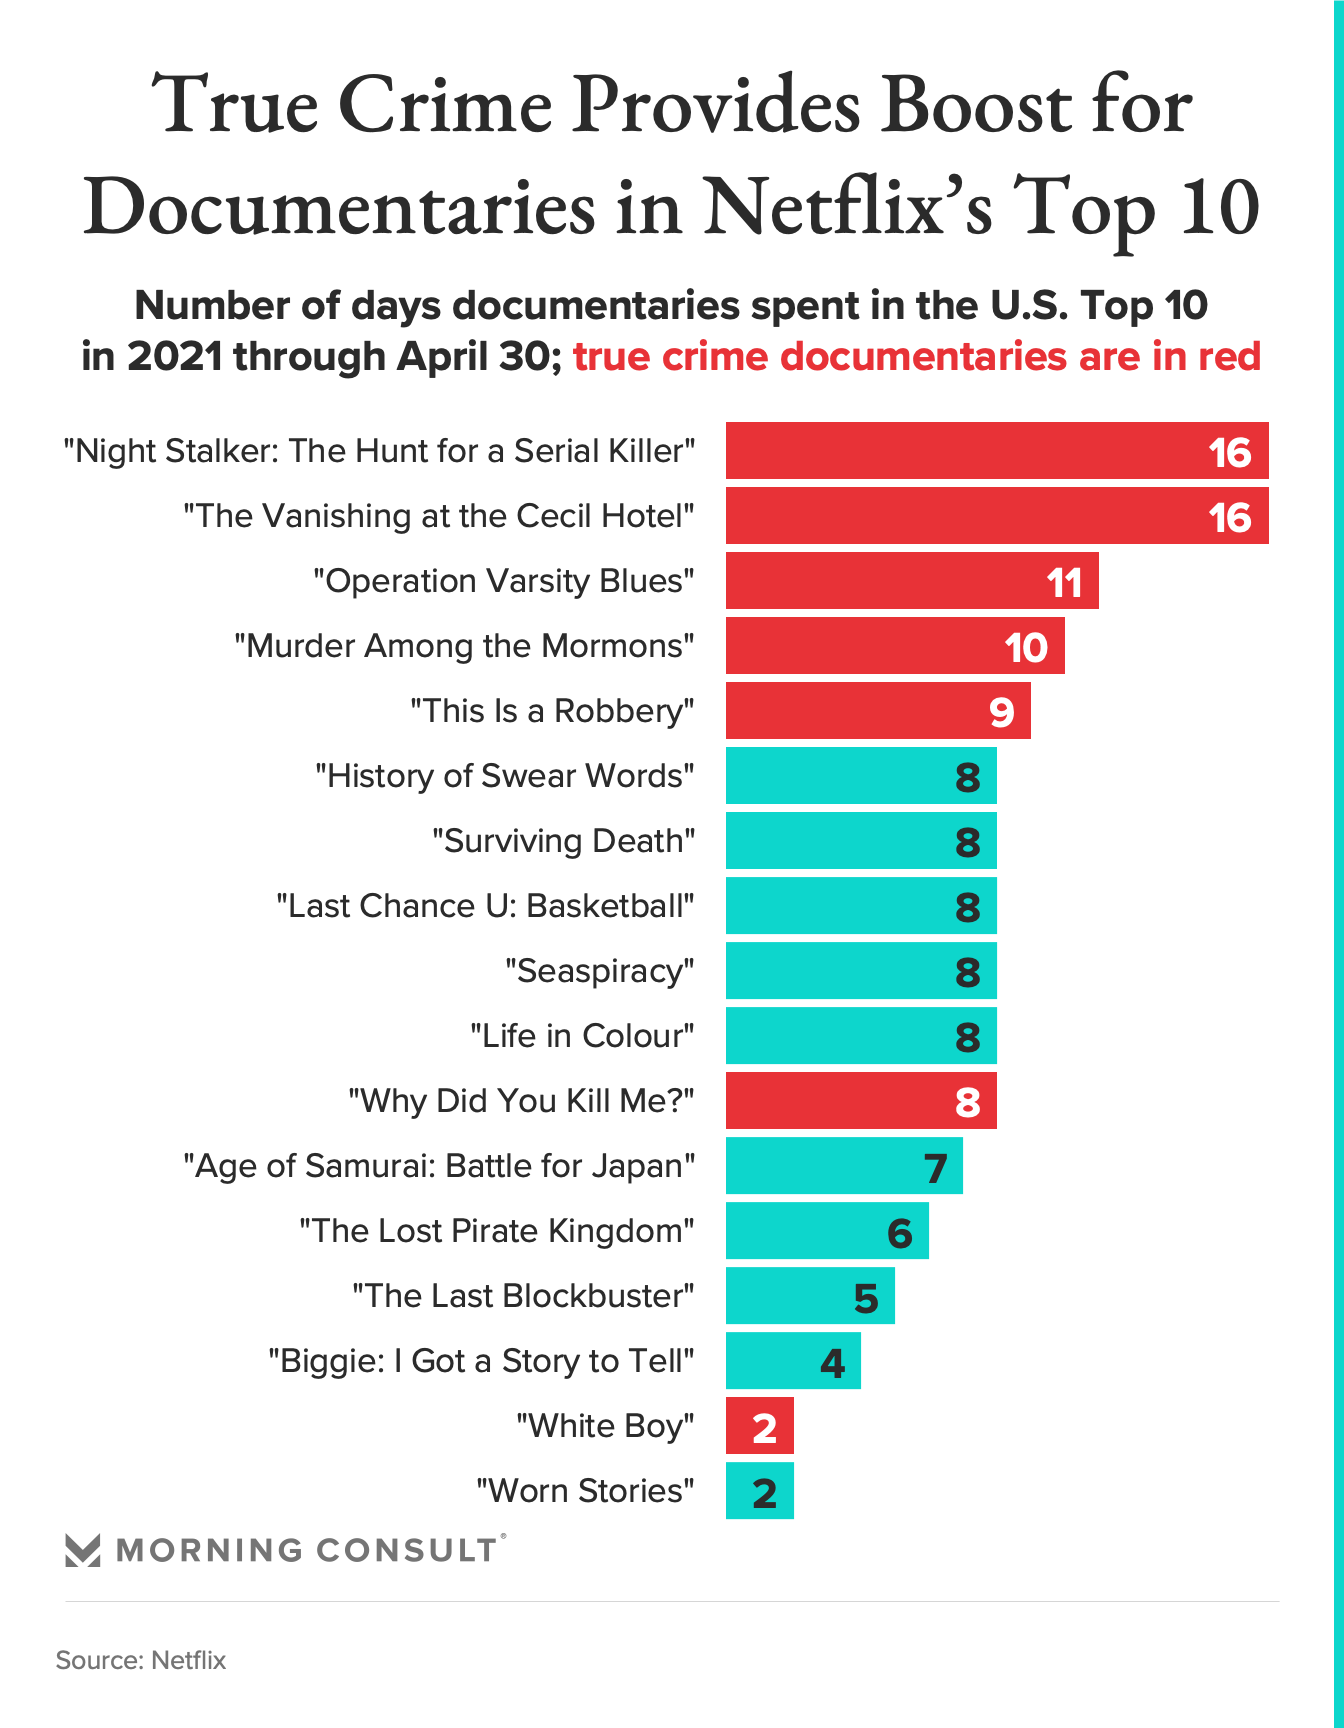 Documentaries Find a Regular in Netflix's Top 10